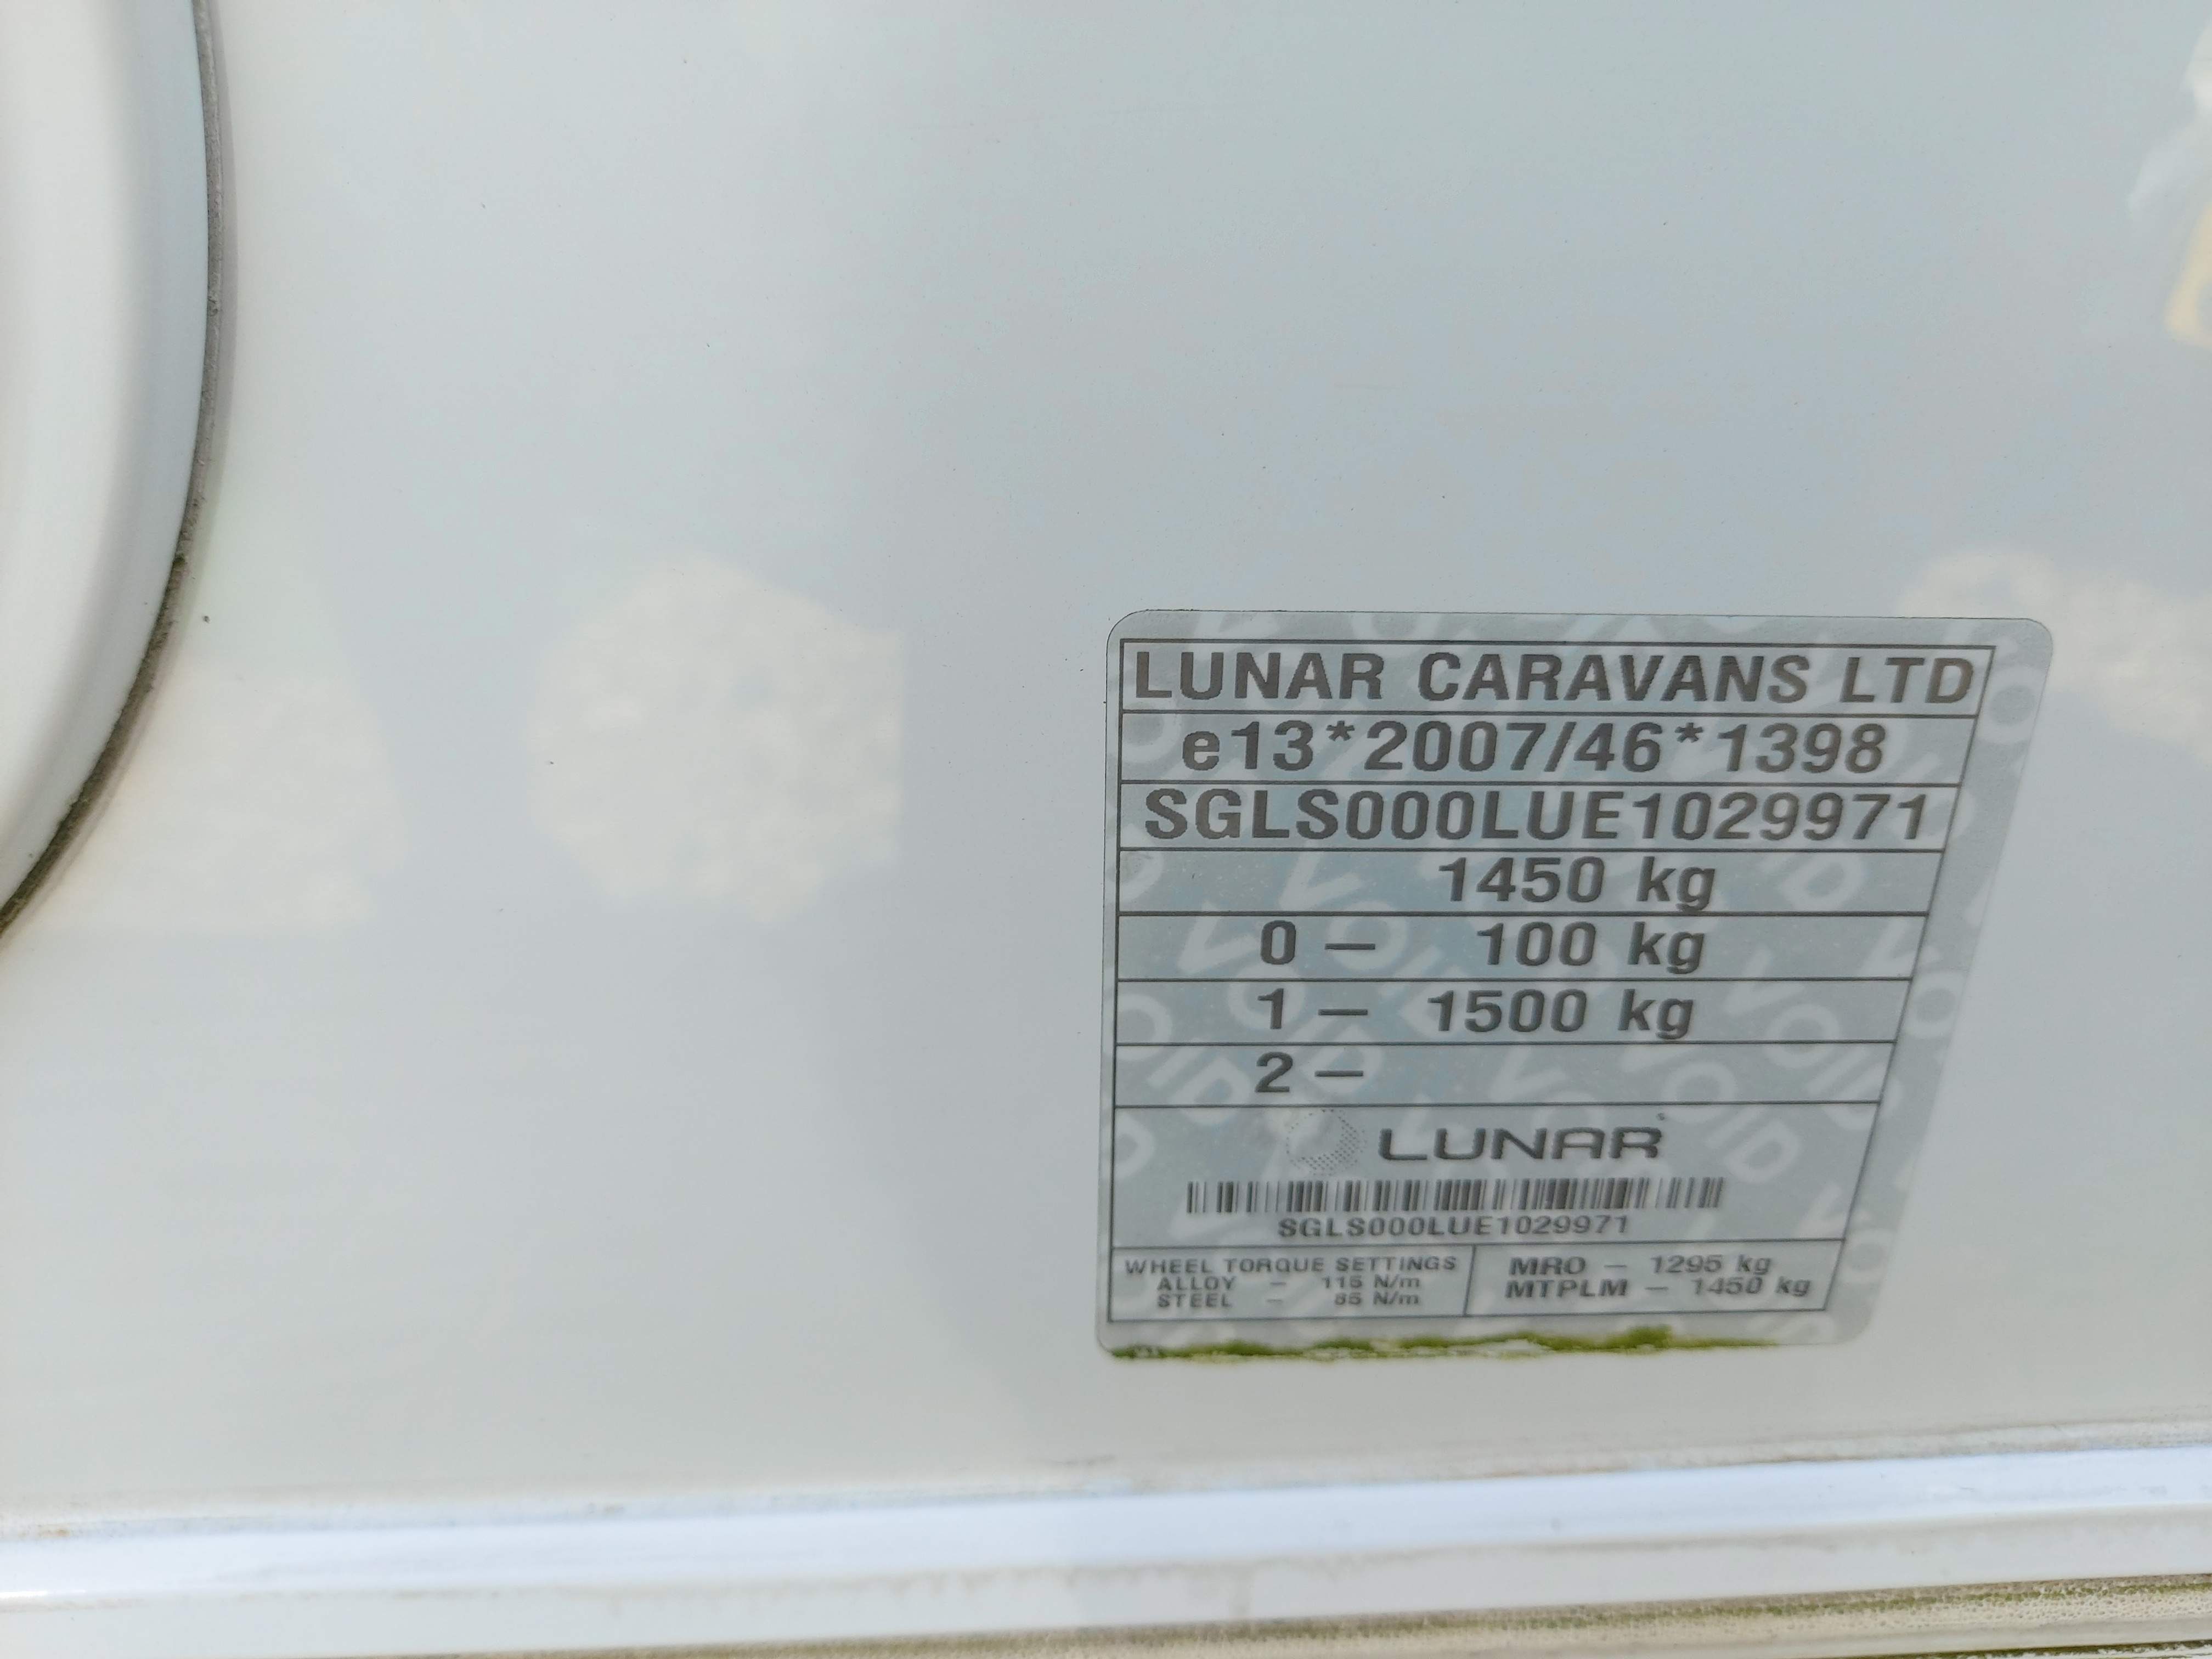 2014 Lunar Clubman SB Fixed Single Beds End Washroom Caravan, Motor Mover